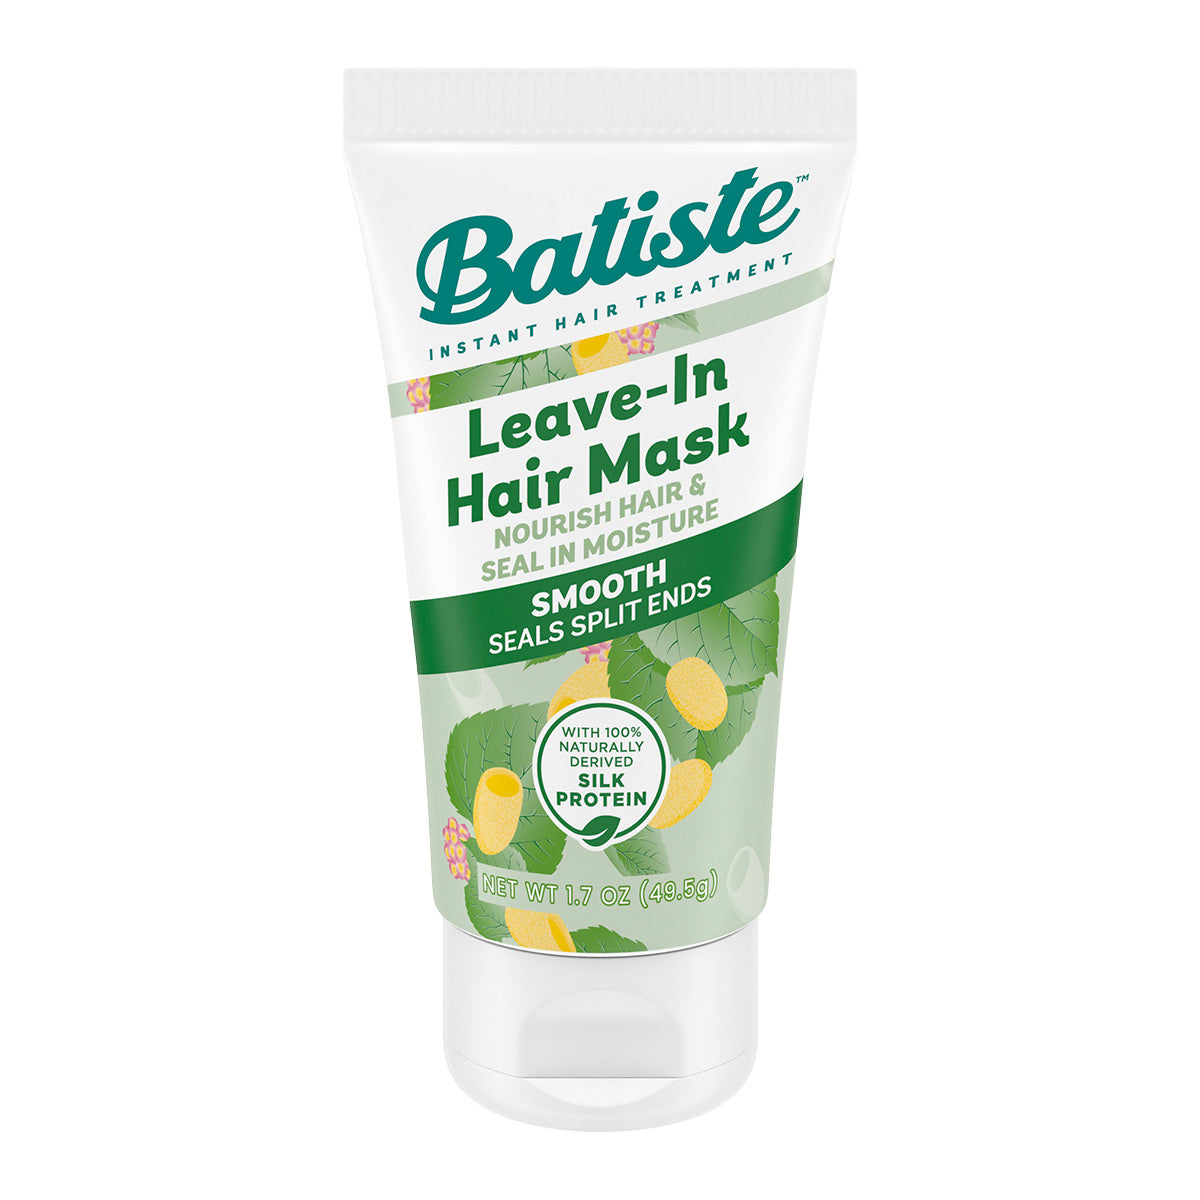 Batiste Smooth Leave-In Hair Mask 1.7 oz